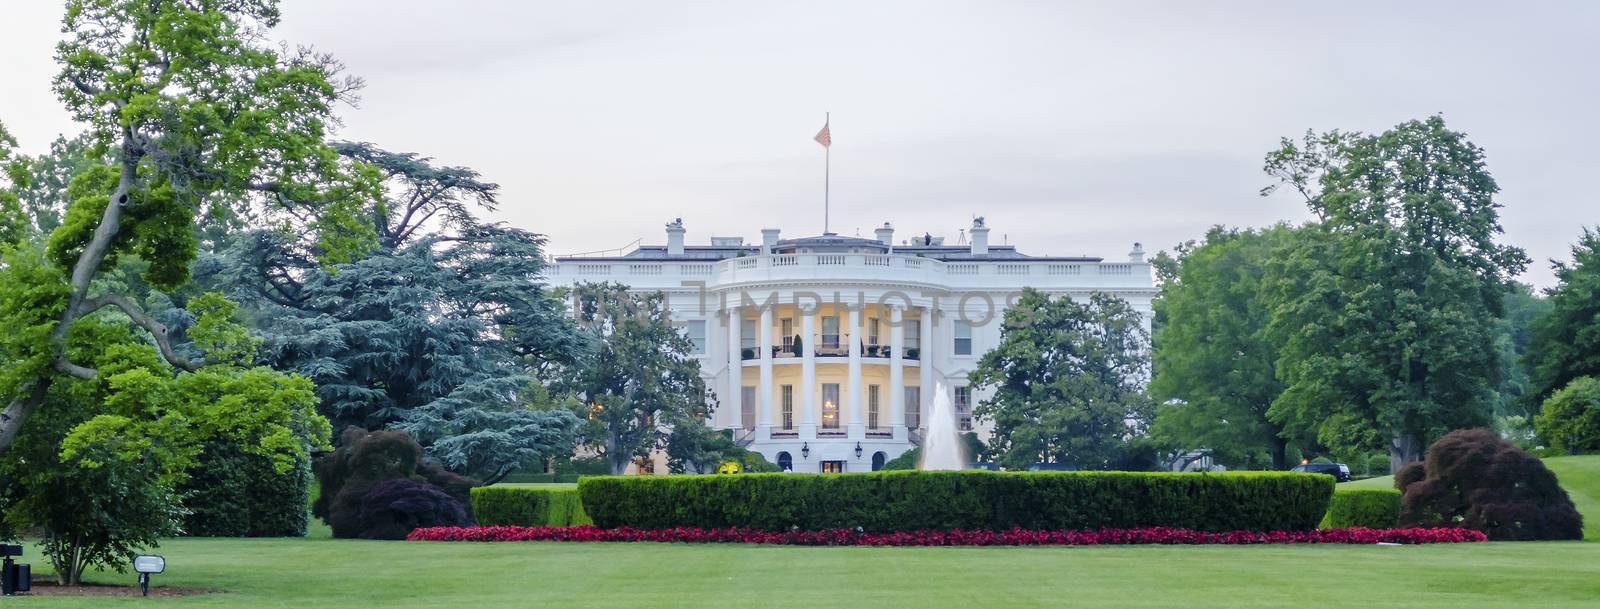 The White House in Washington DC, USA by marcorubino